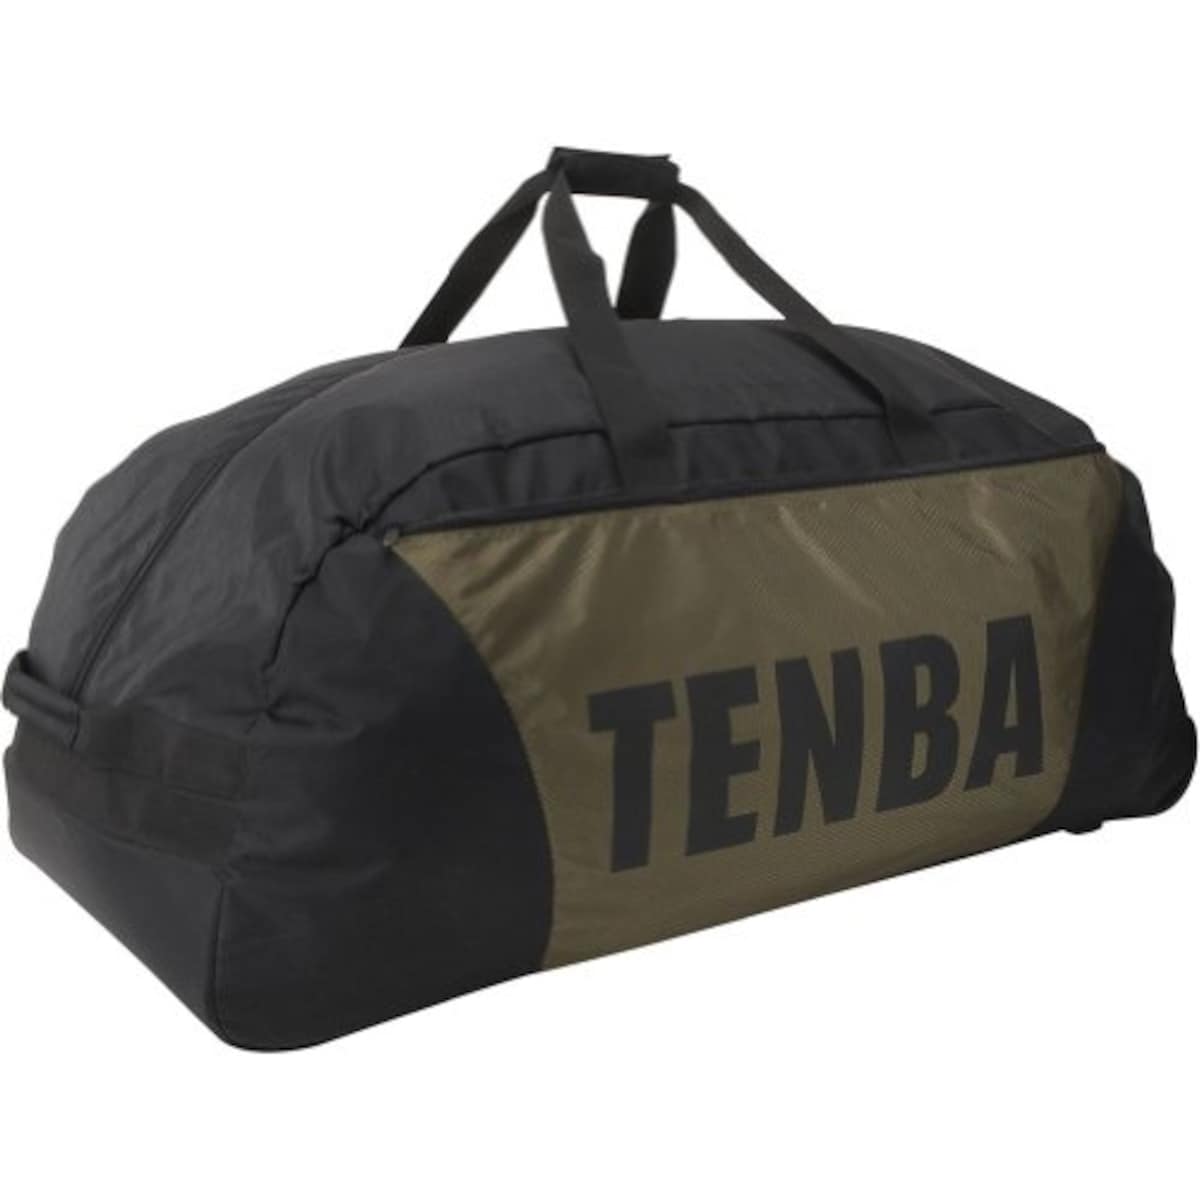 TENBA カートバッグ シュートアウト 多目的ダッフル ローラー付 ブラック/オリーブ 632-901